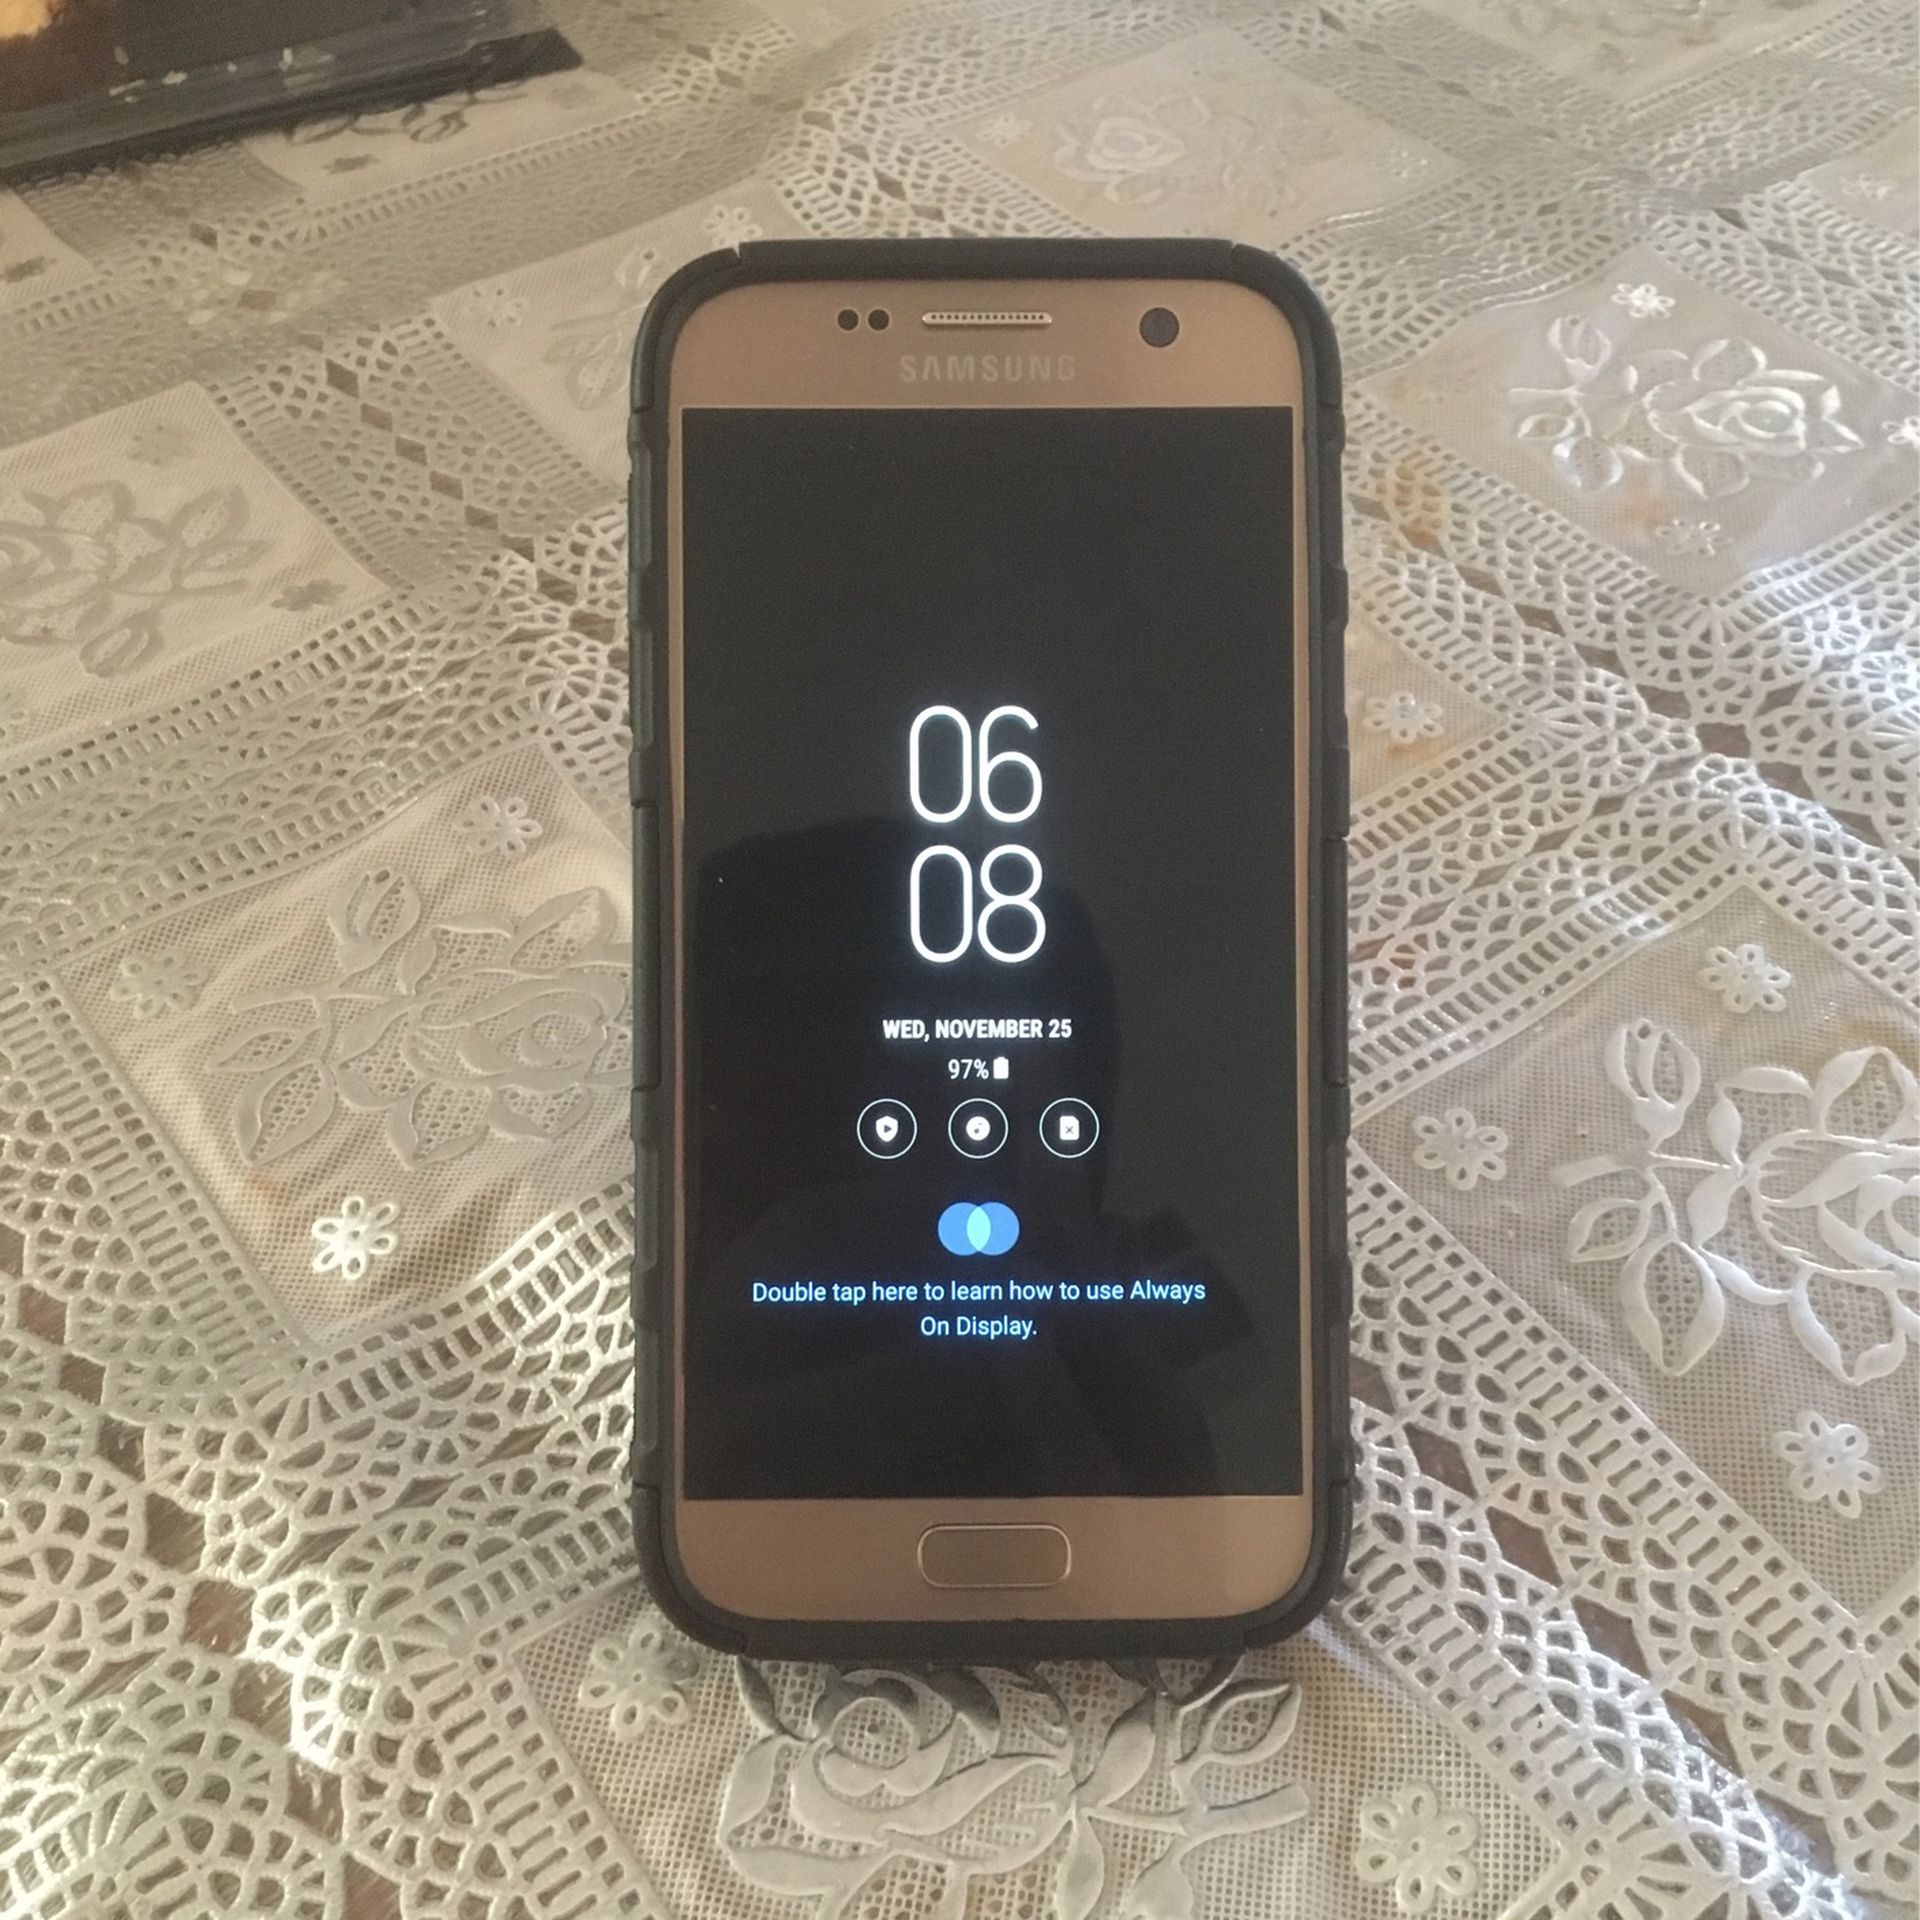 Samsung Galaxy S7 (VERIZON Only UNLOCKED)$150 Obo